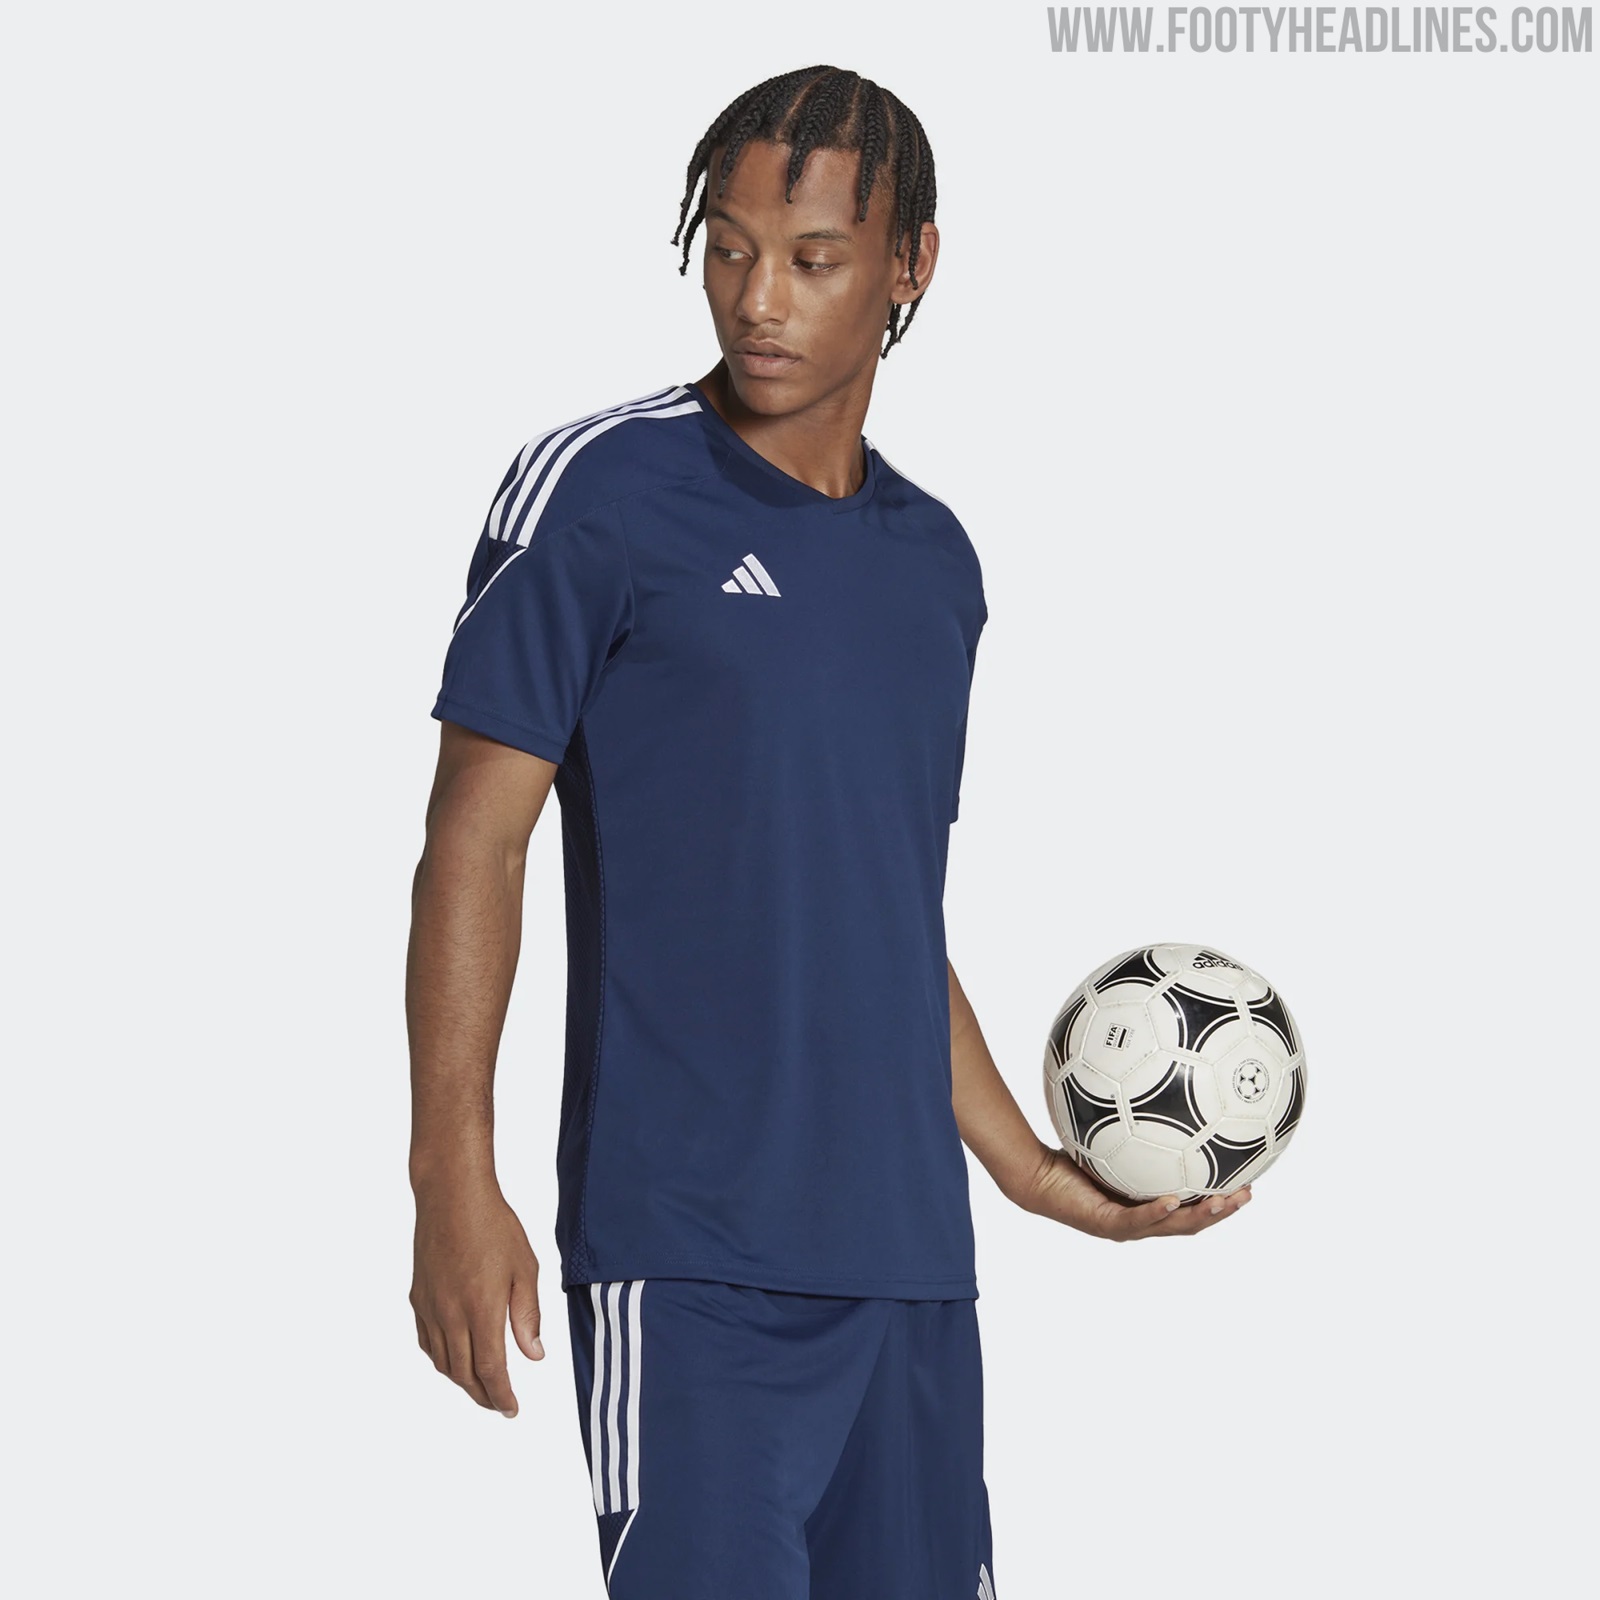 New Adidas Logo: Adidas Tiro 23 League Kit Leaked - To Be Used for 2023-24  Season - Footy Headlines